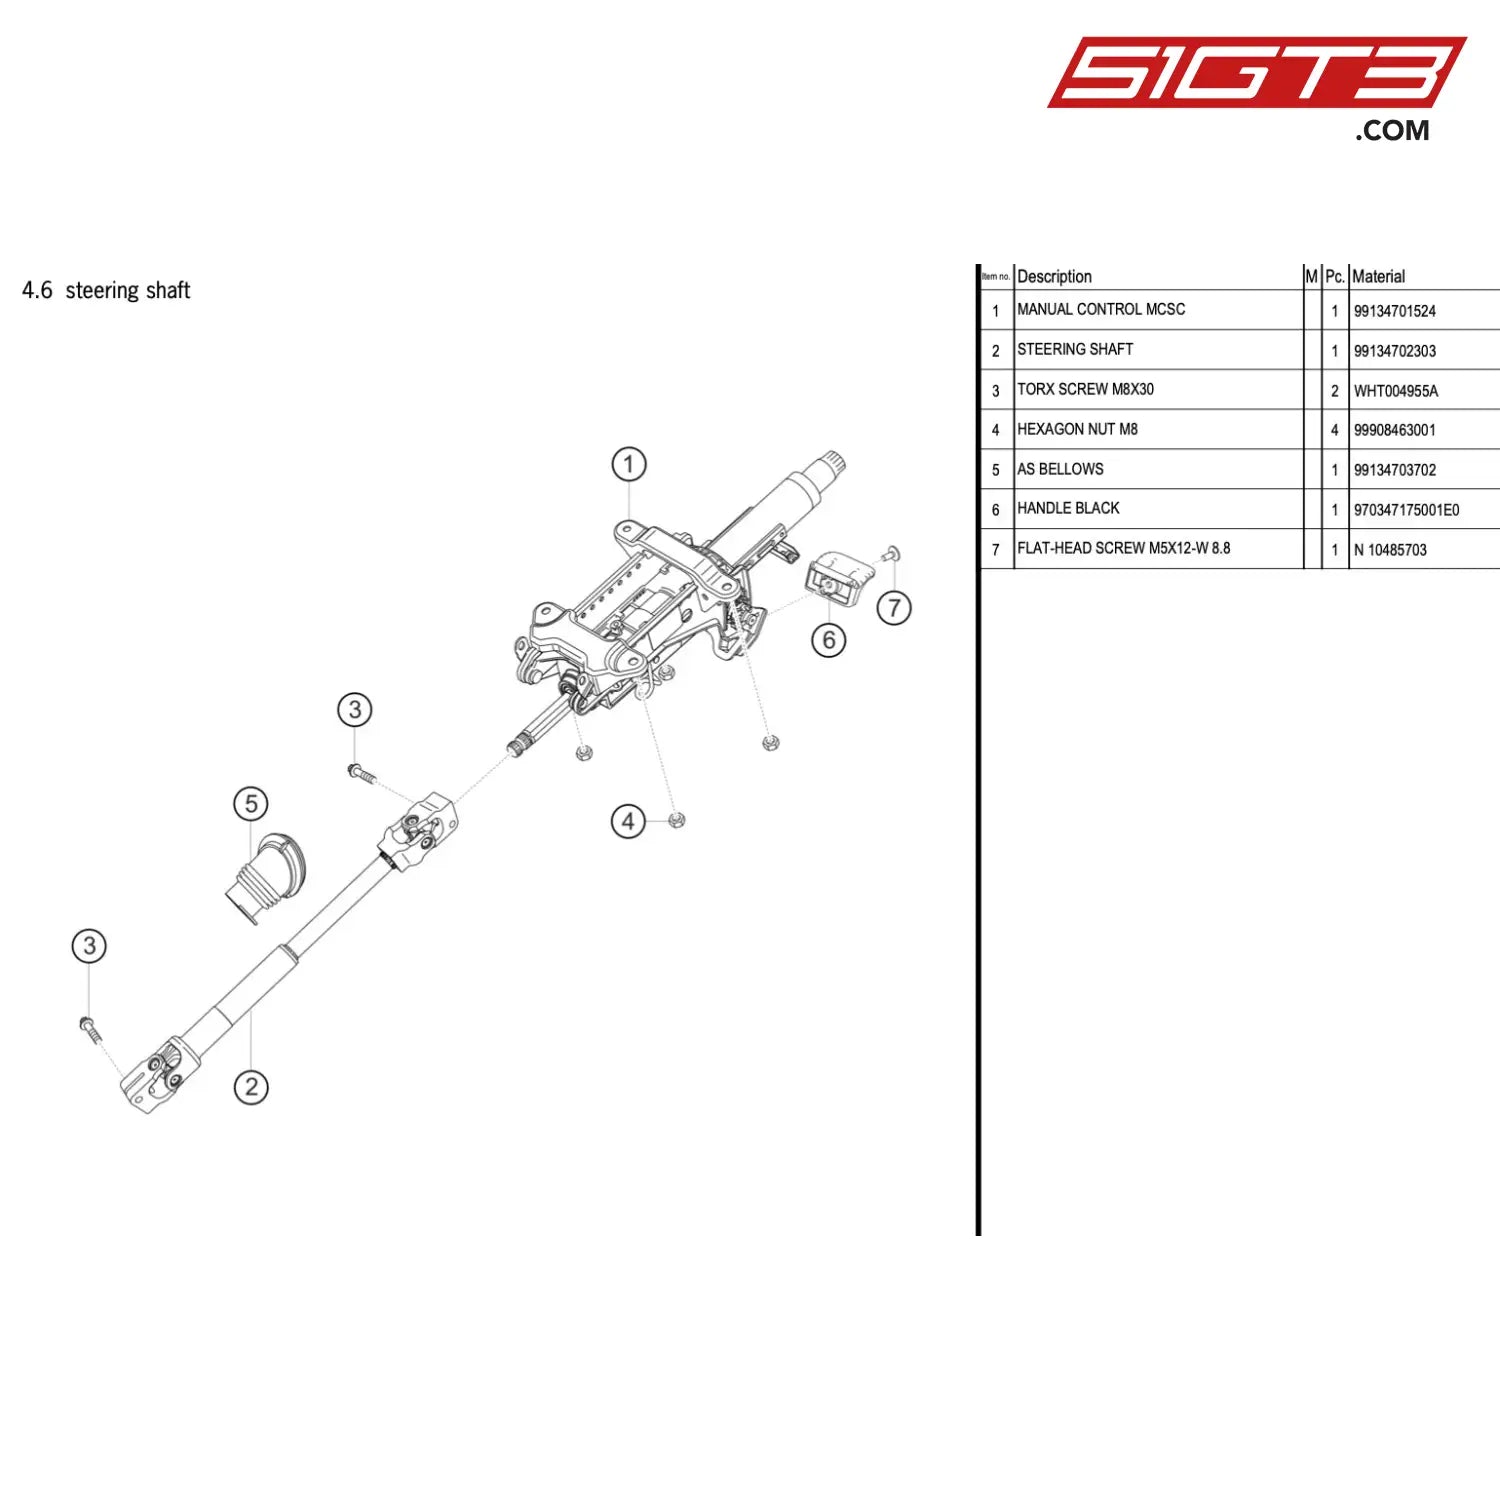 Steering Shaft - 99134702303 [Porsche 718 Cayman Gt4 Rs Clubsport] Steering Shaft